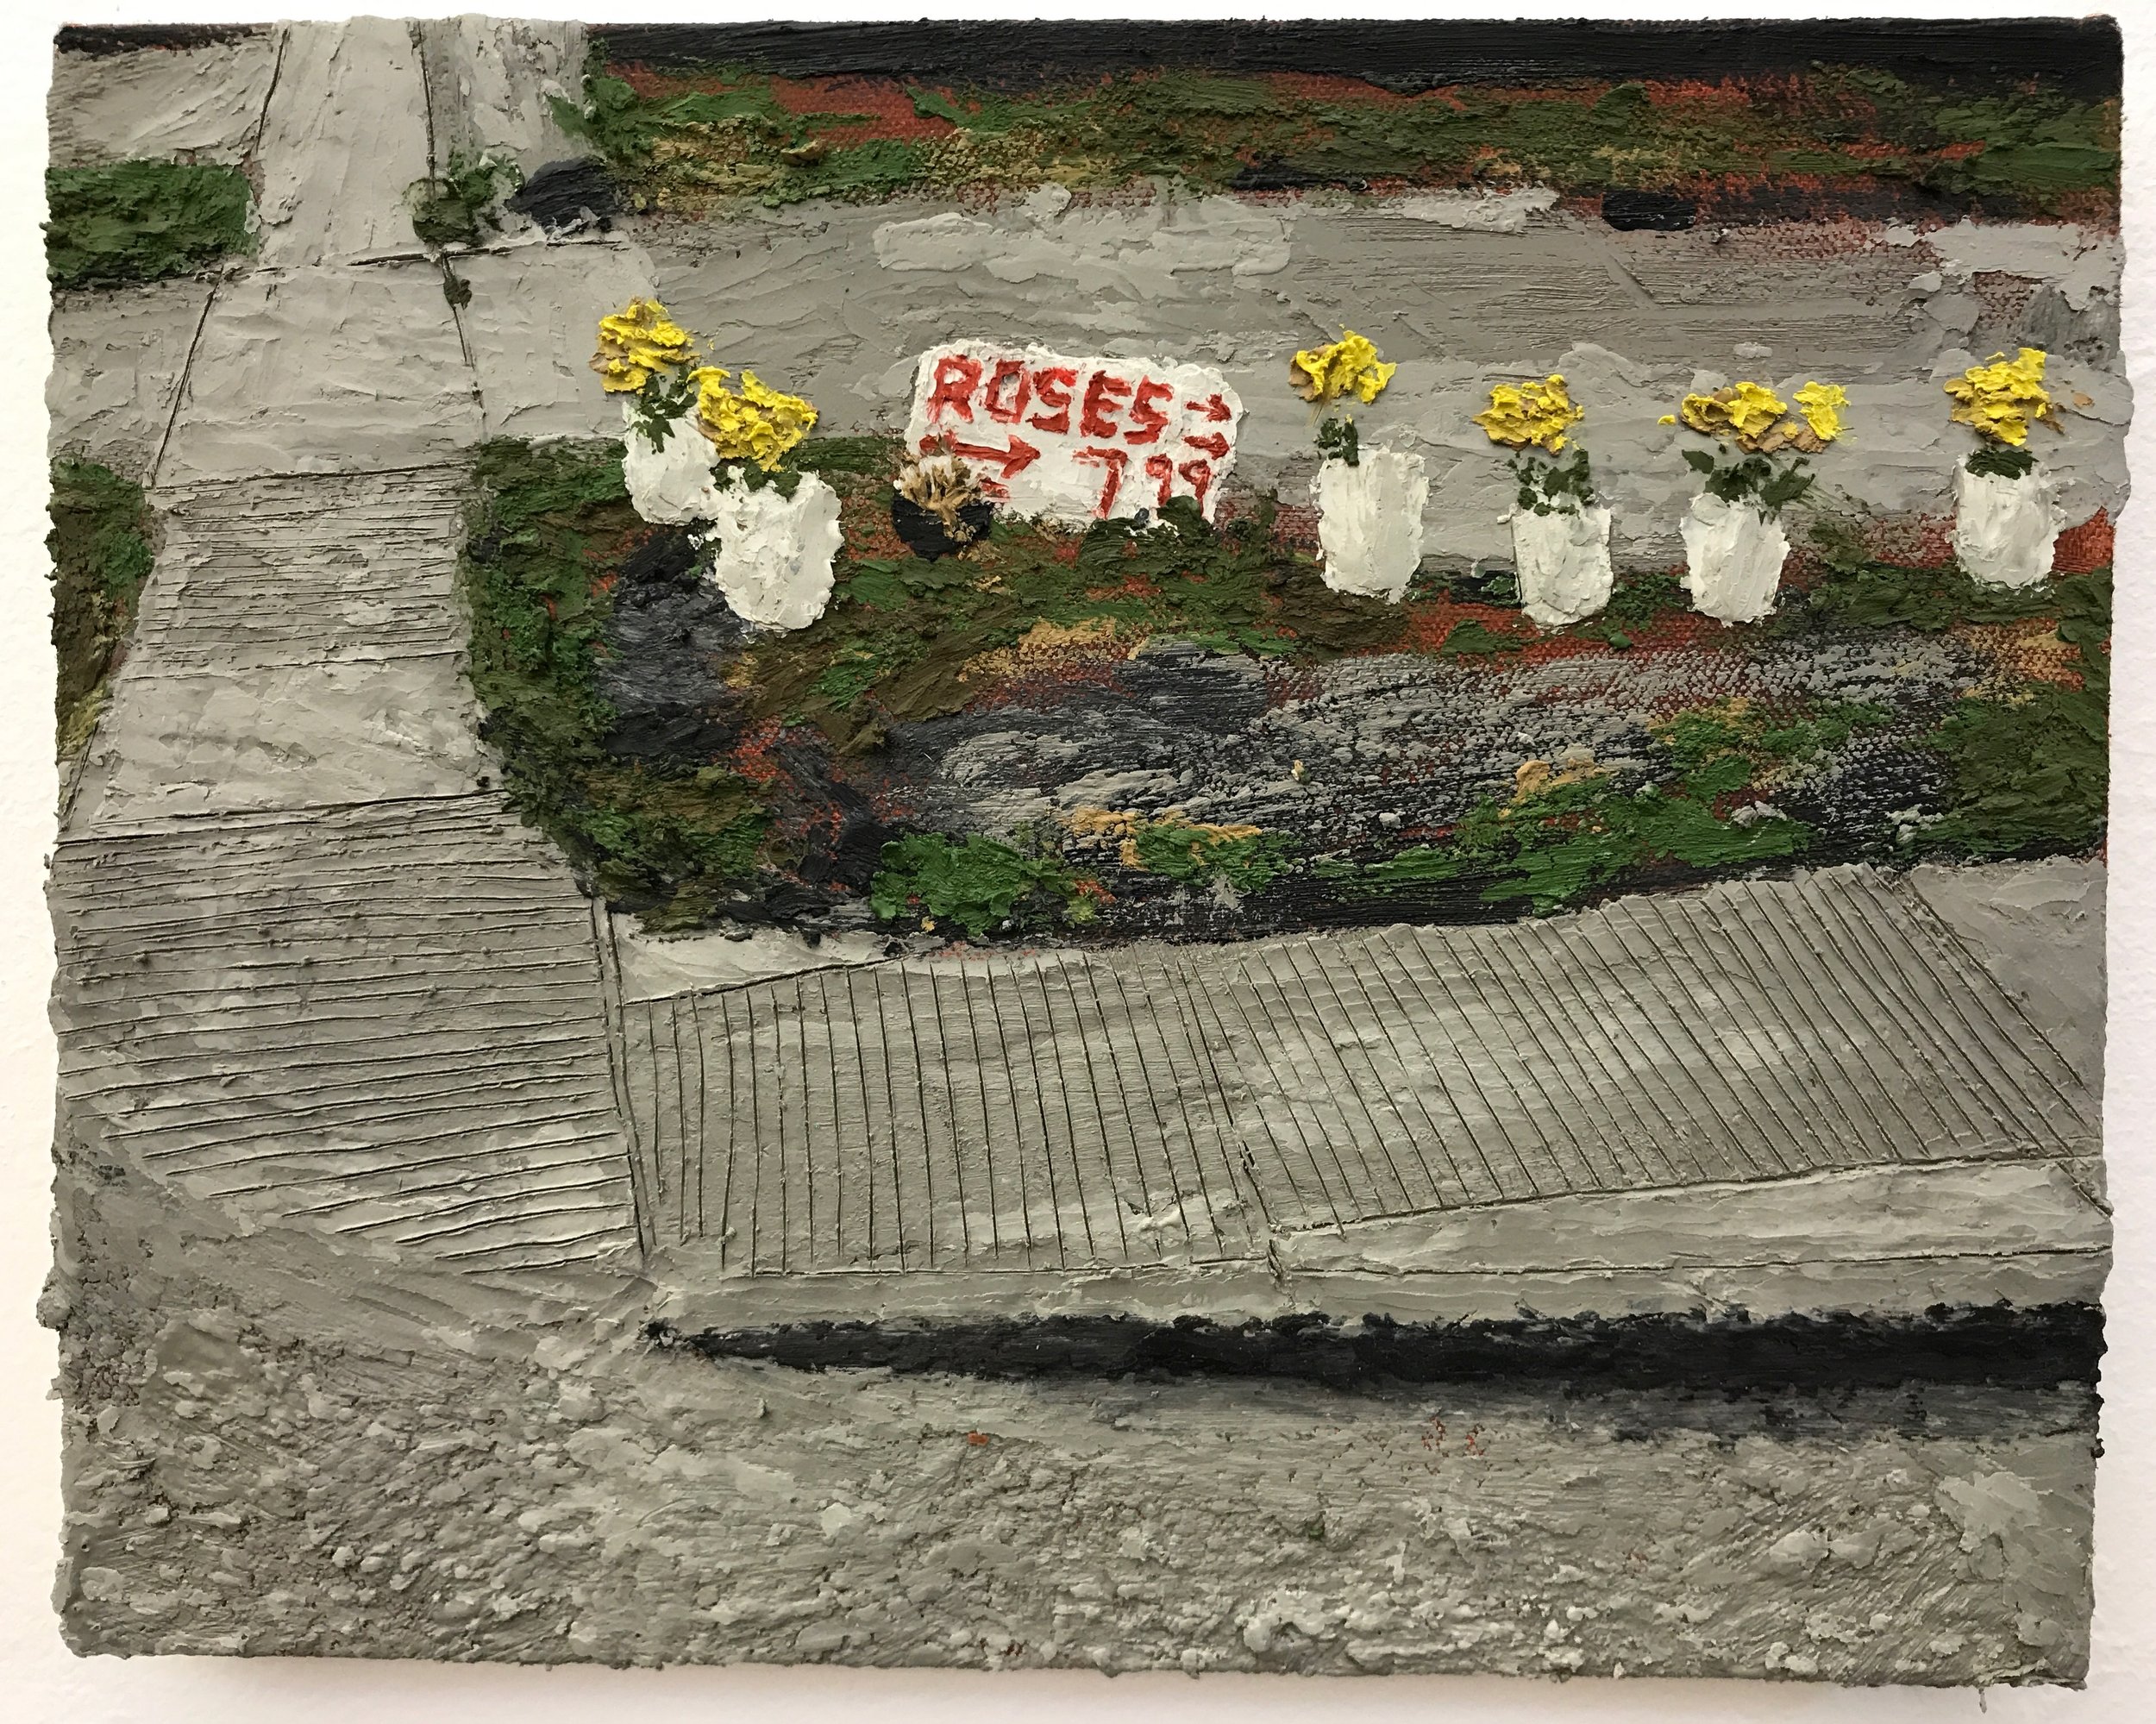 Sidewalk and Flowers / 2018 / Encaustic on canvas / 8" x 10"